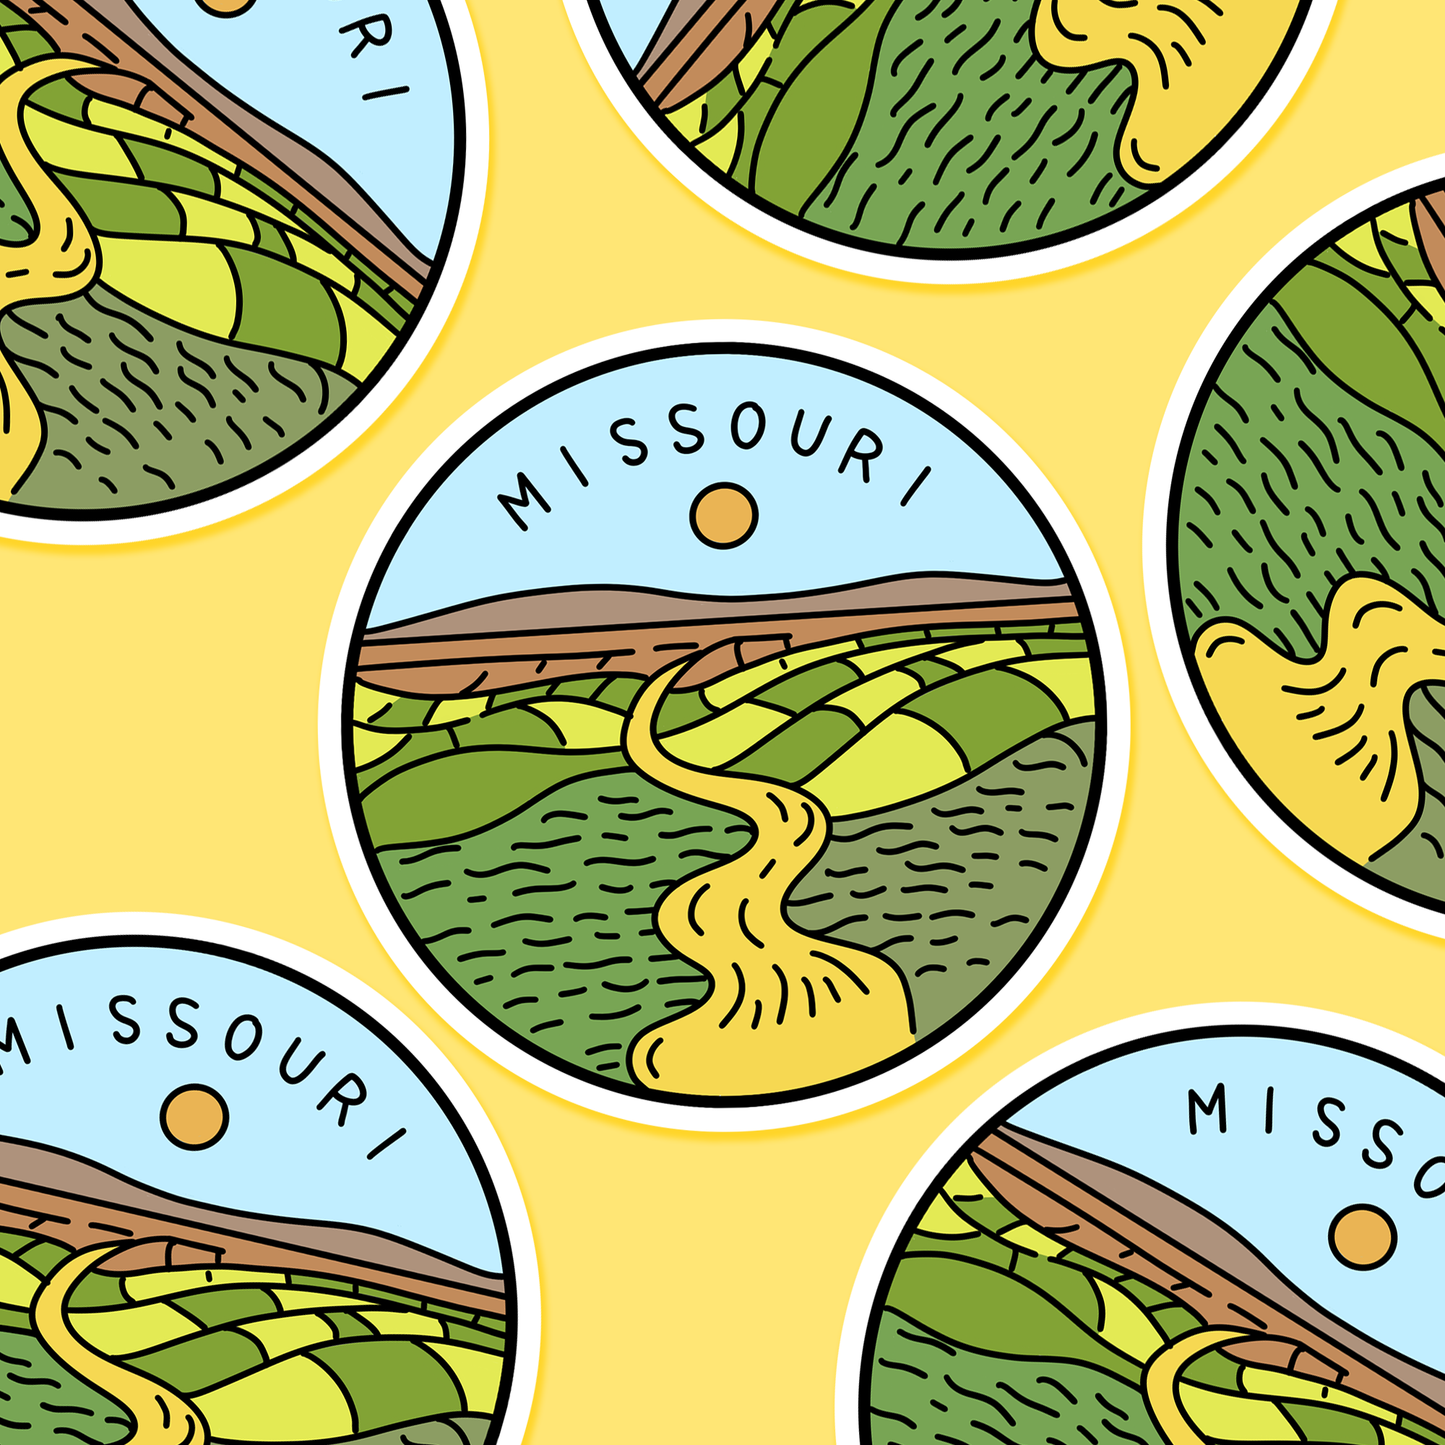 Missouri Illustrated US State 3 x 3 in - Travel Sticker